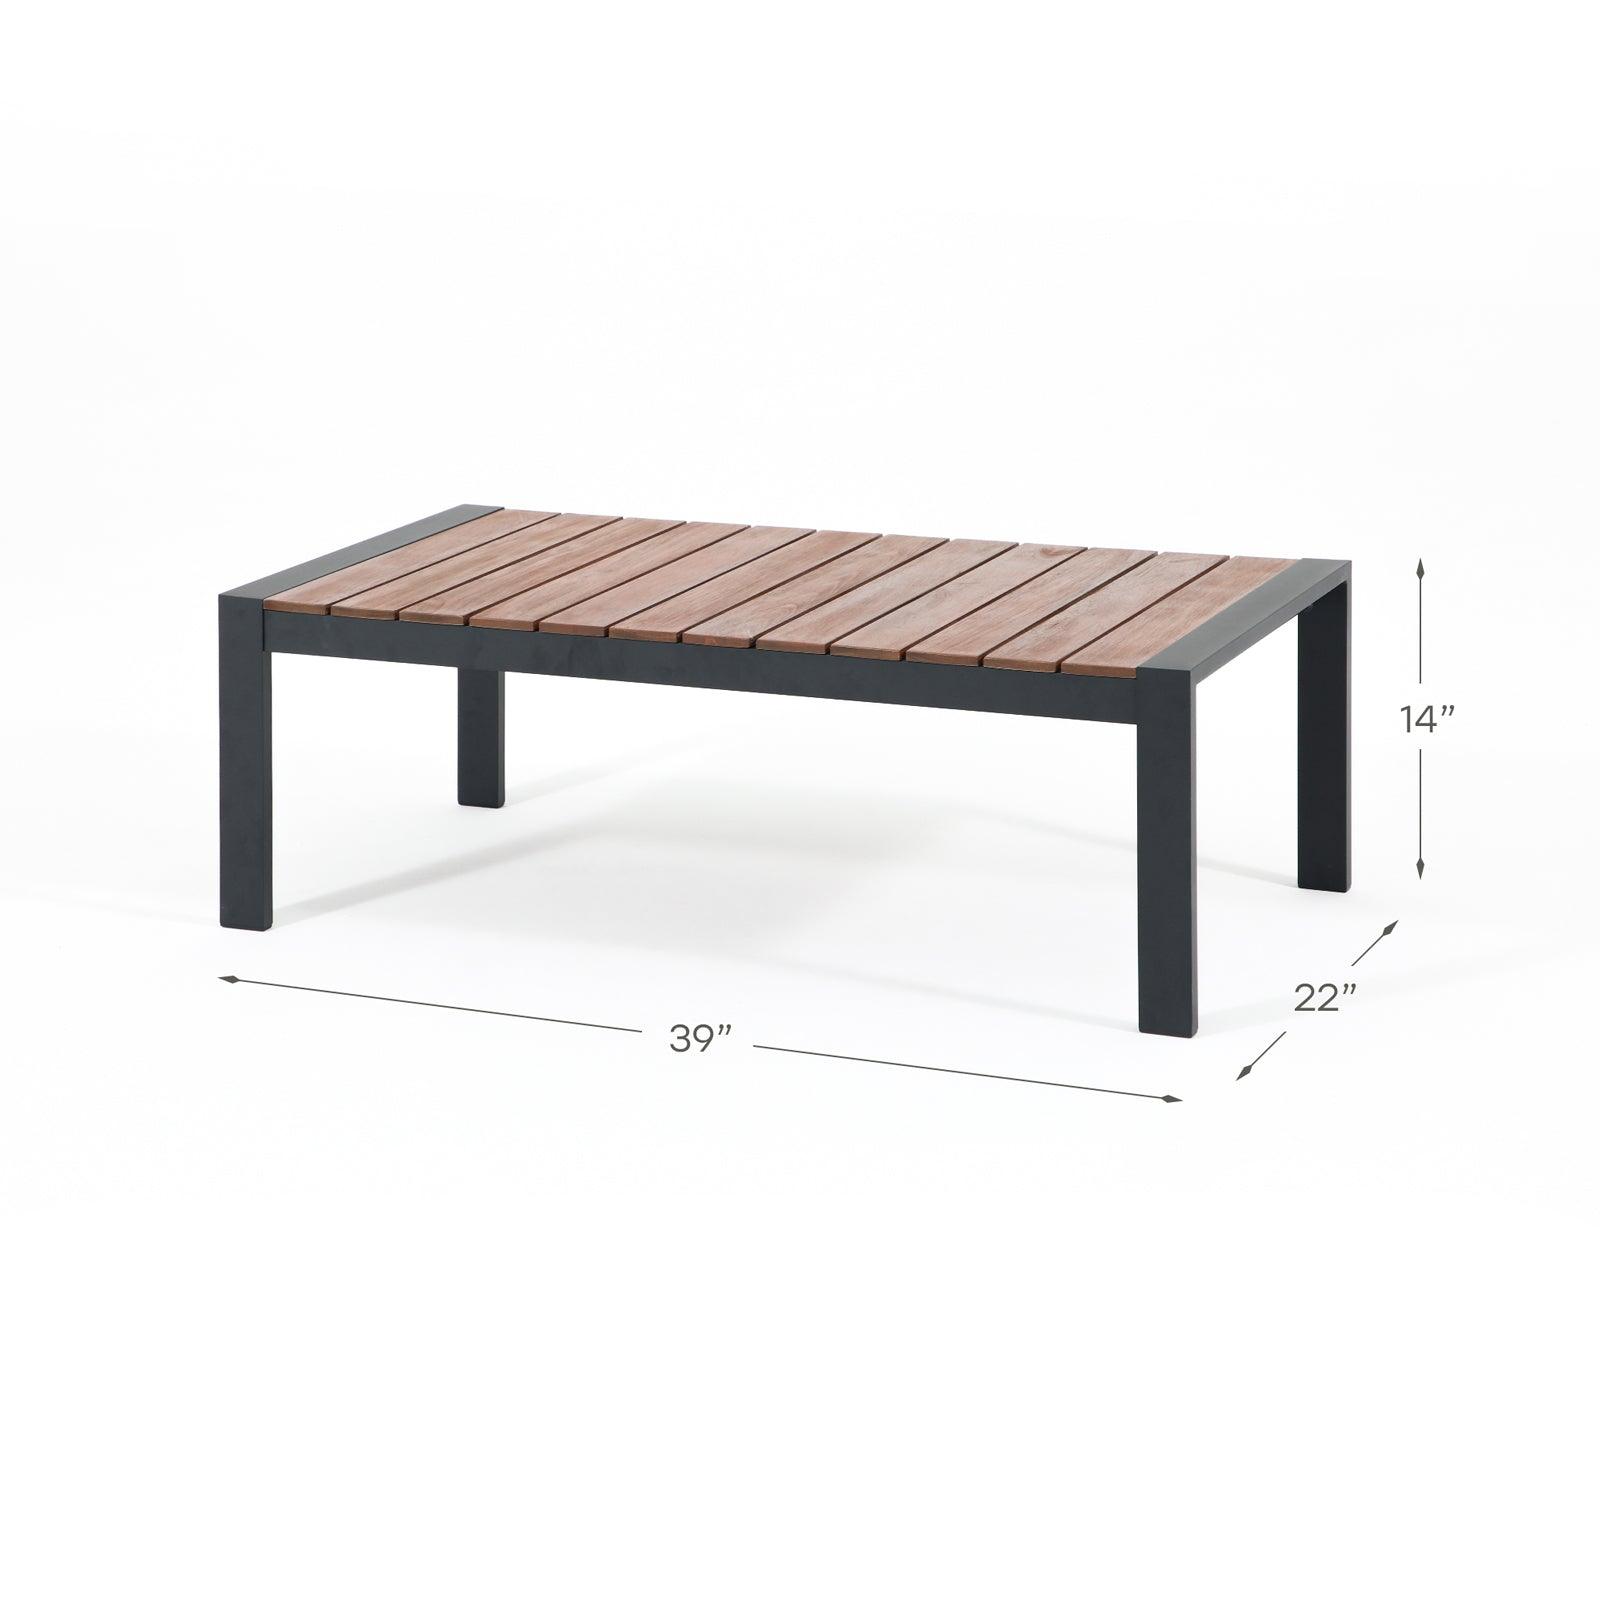 Ronda Grey aluminum outdoor coffee table with wood design, Dimension information- Jardina Furniture